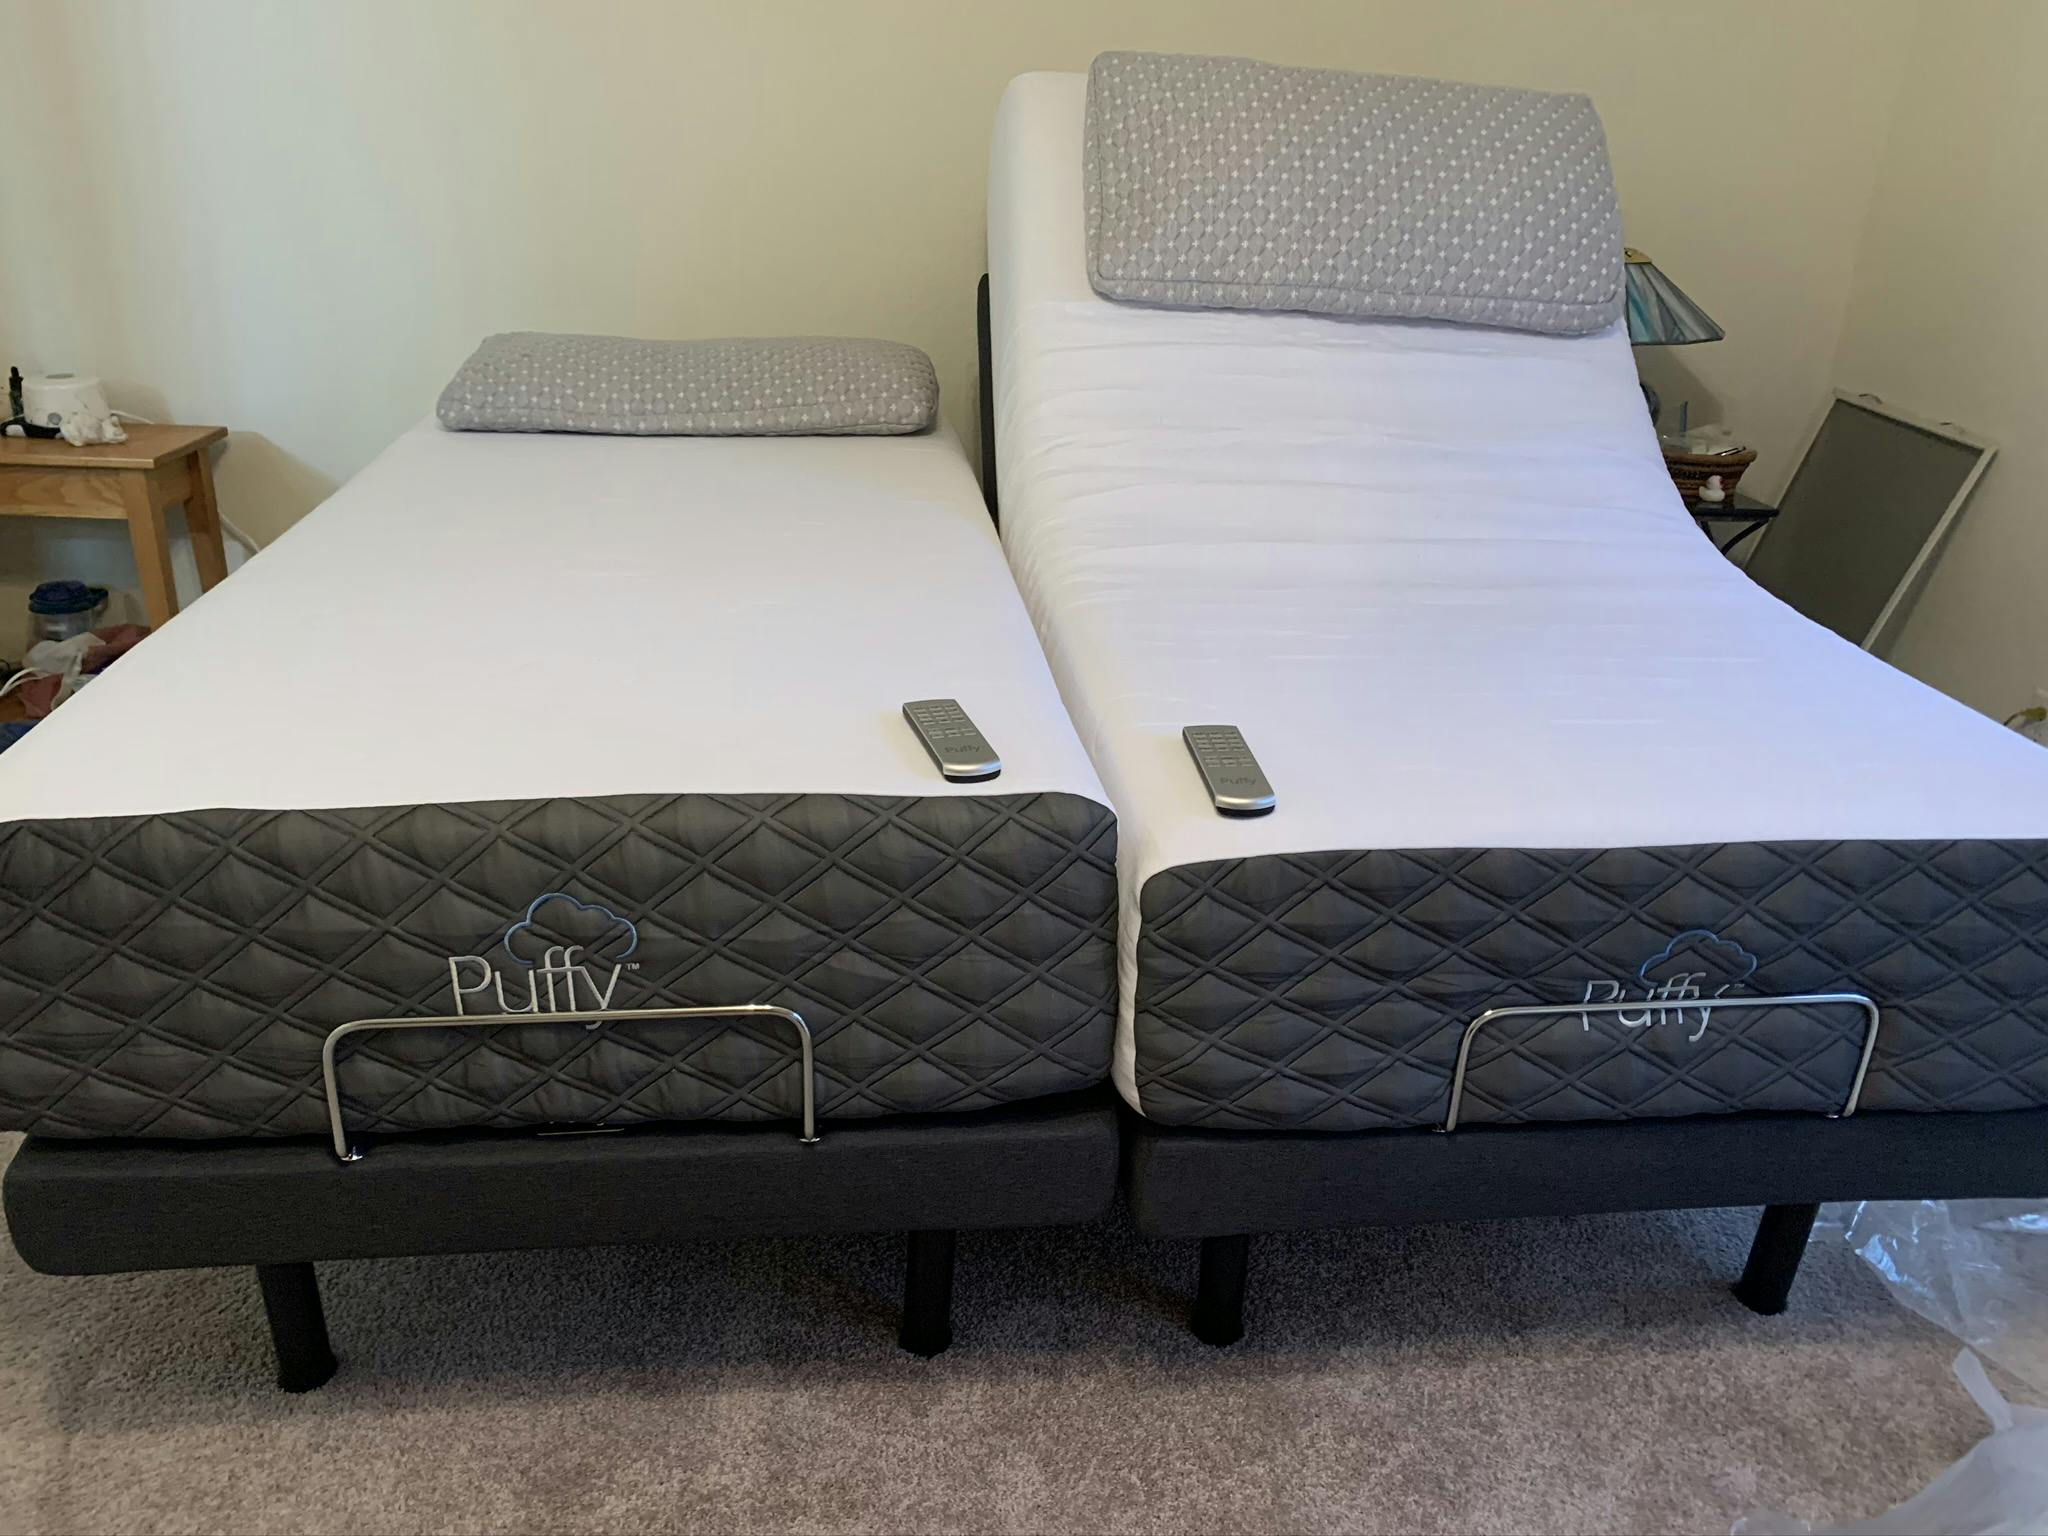 puffy mattress king size mattress dimensions